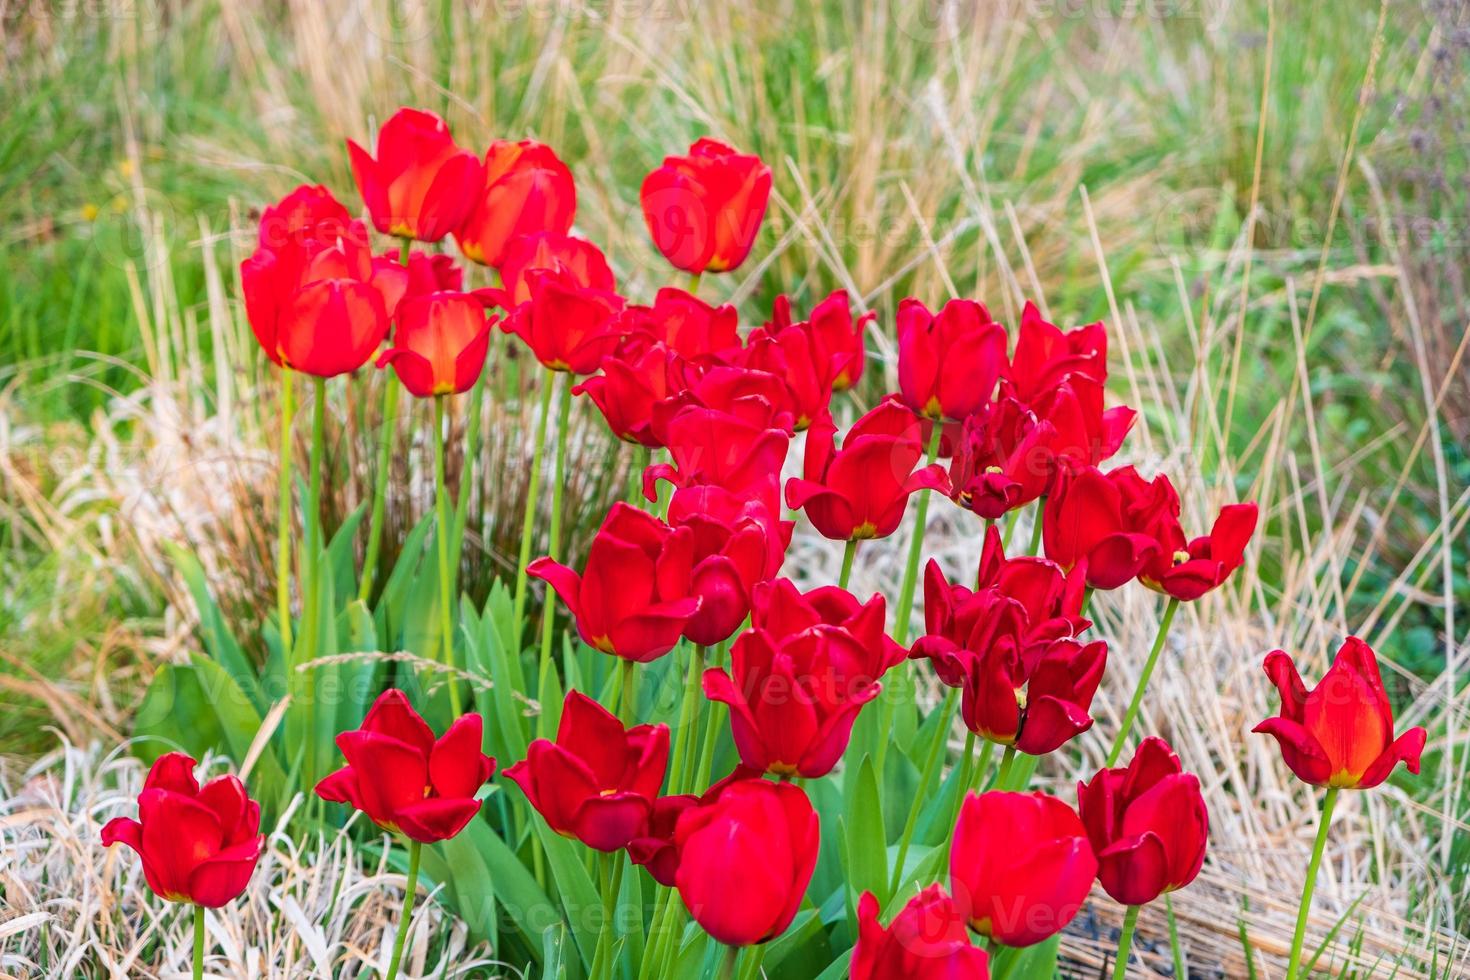 rote Tulpen im Whitworth Park, Manchester. Frühlingslandschaft foto